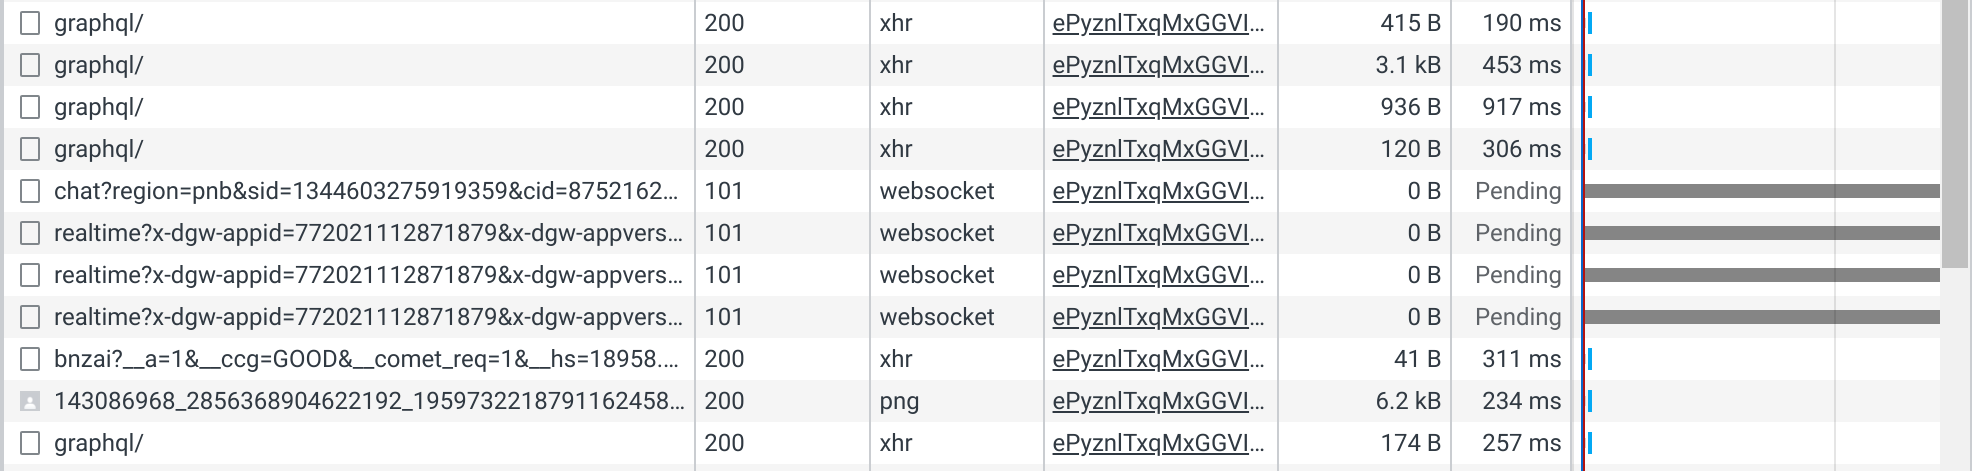 Websocket requests shown as
Pending